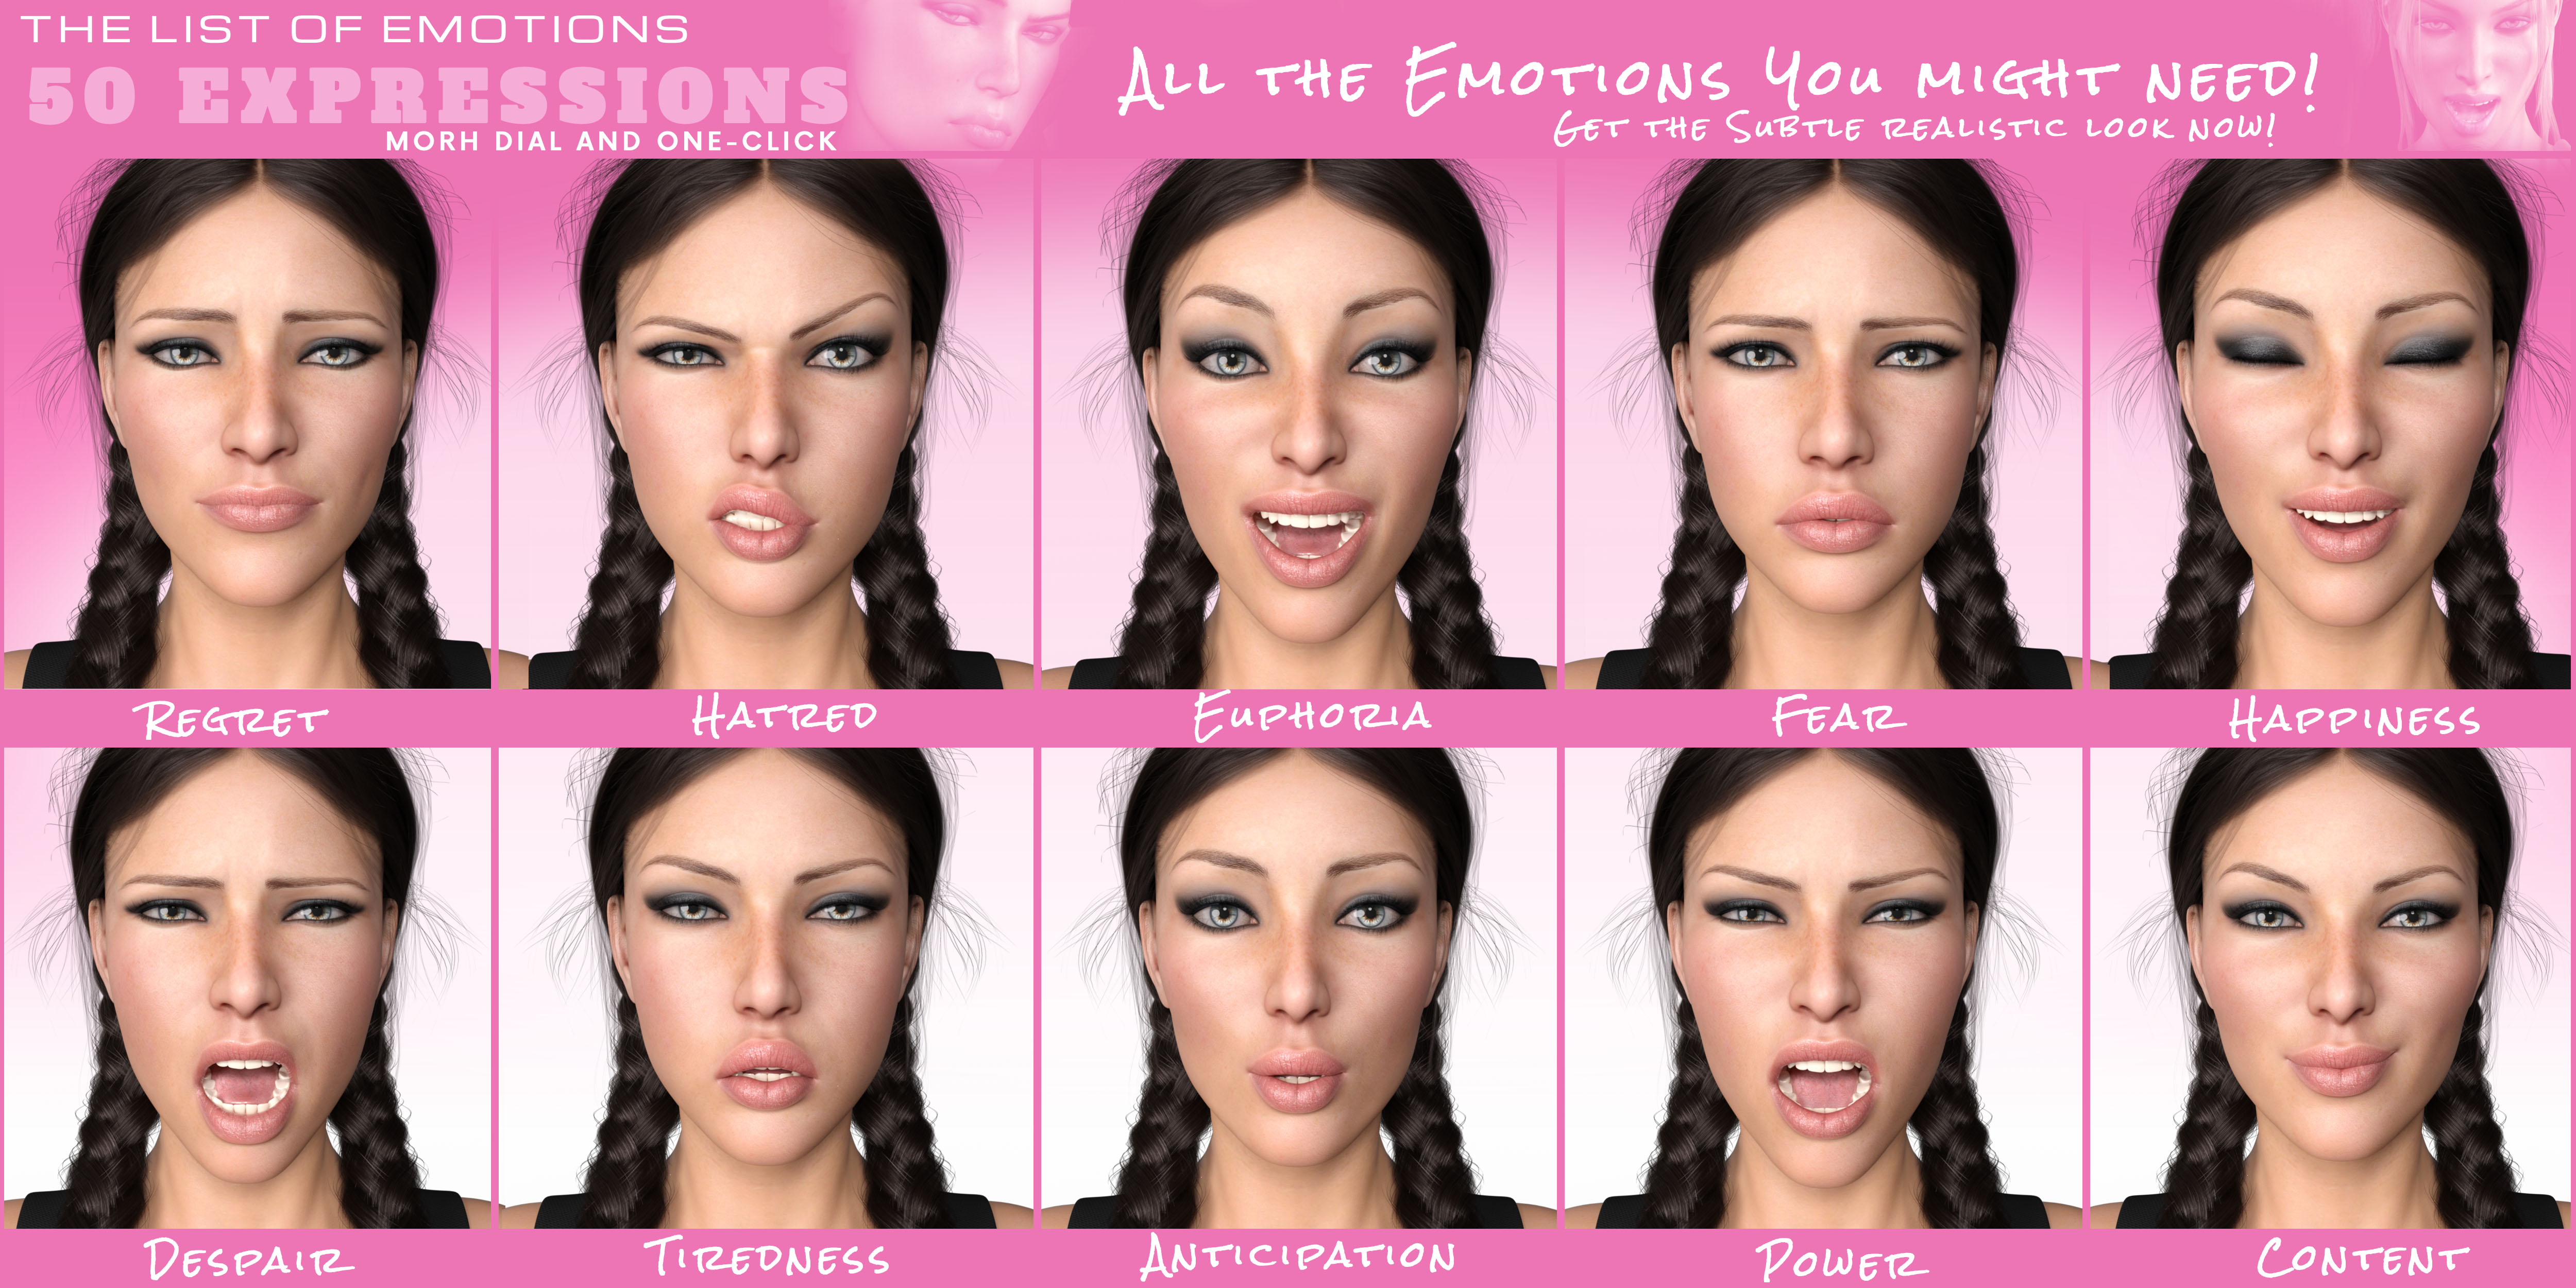 Z The Big 50 : The List of Emotions for Genesis 8 Female by: Zeddicuss, 3D Models by Daz 3D